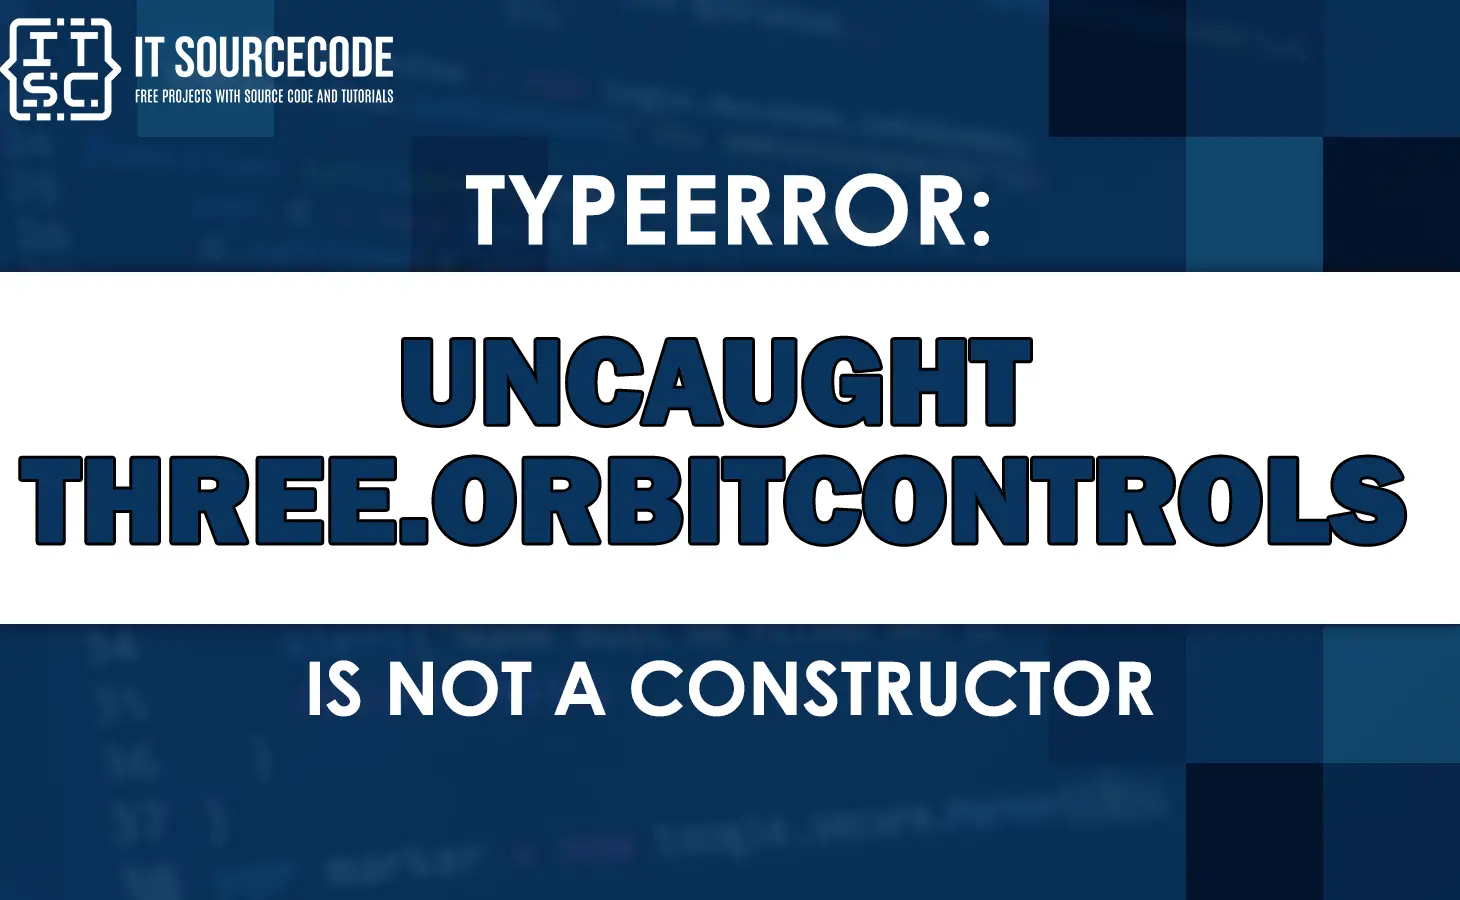 Uncaught typeerror three.orbitcontrols is not a constructor